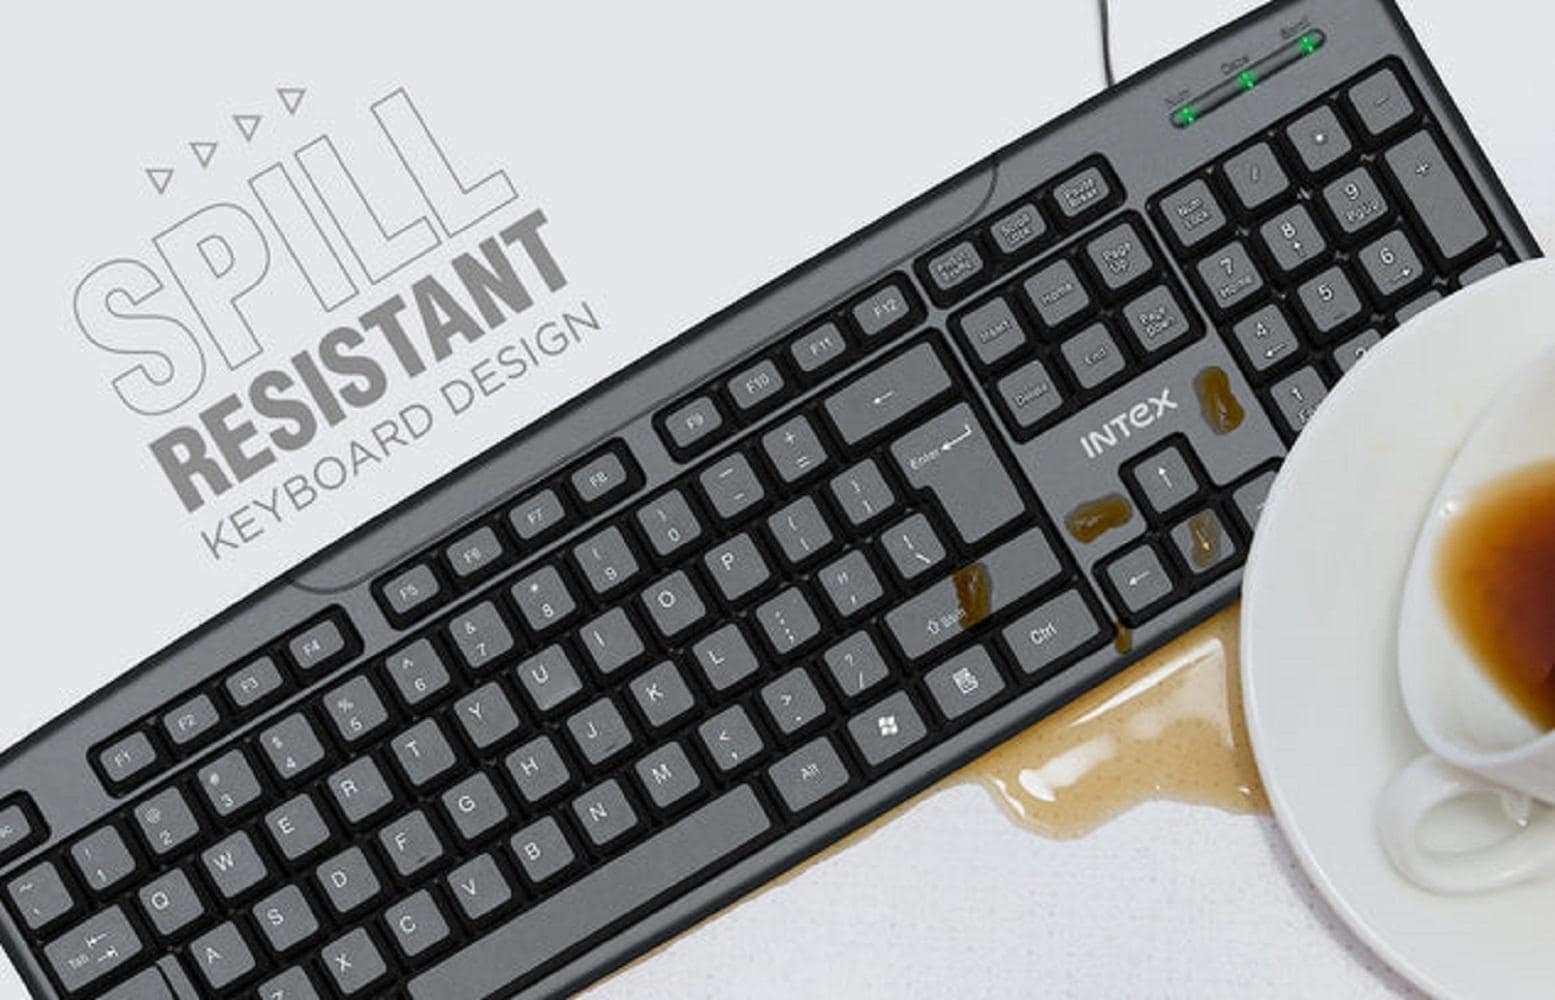 Intex Corona G IT-KB333 Wired Keyboard